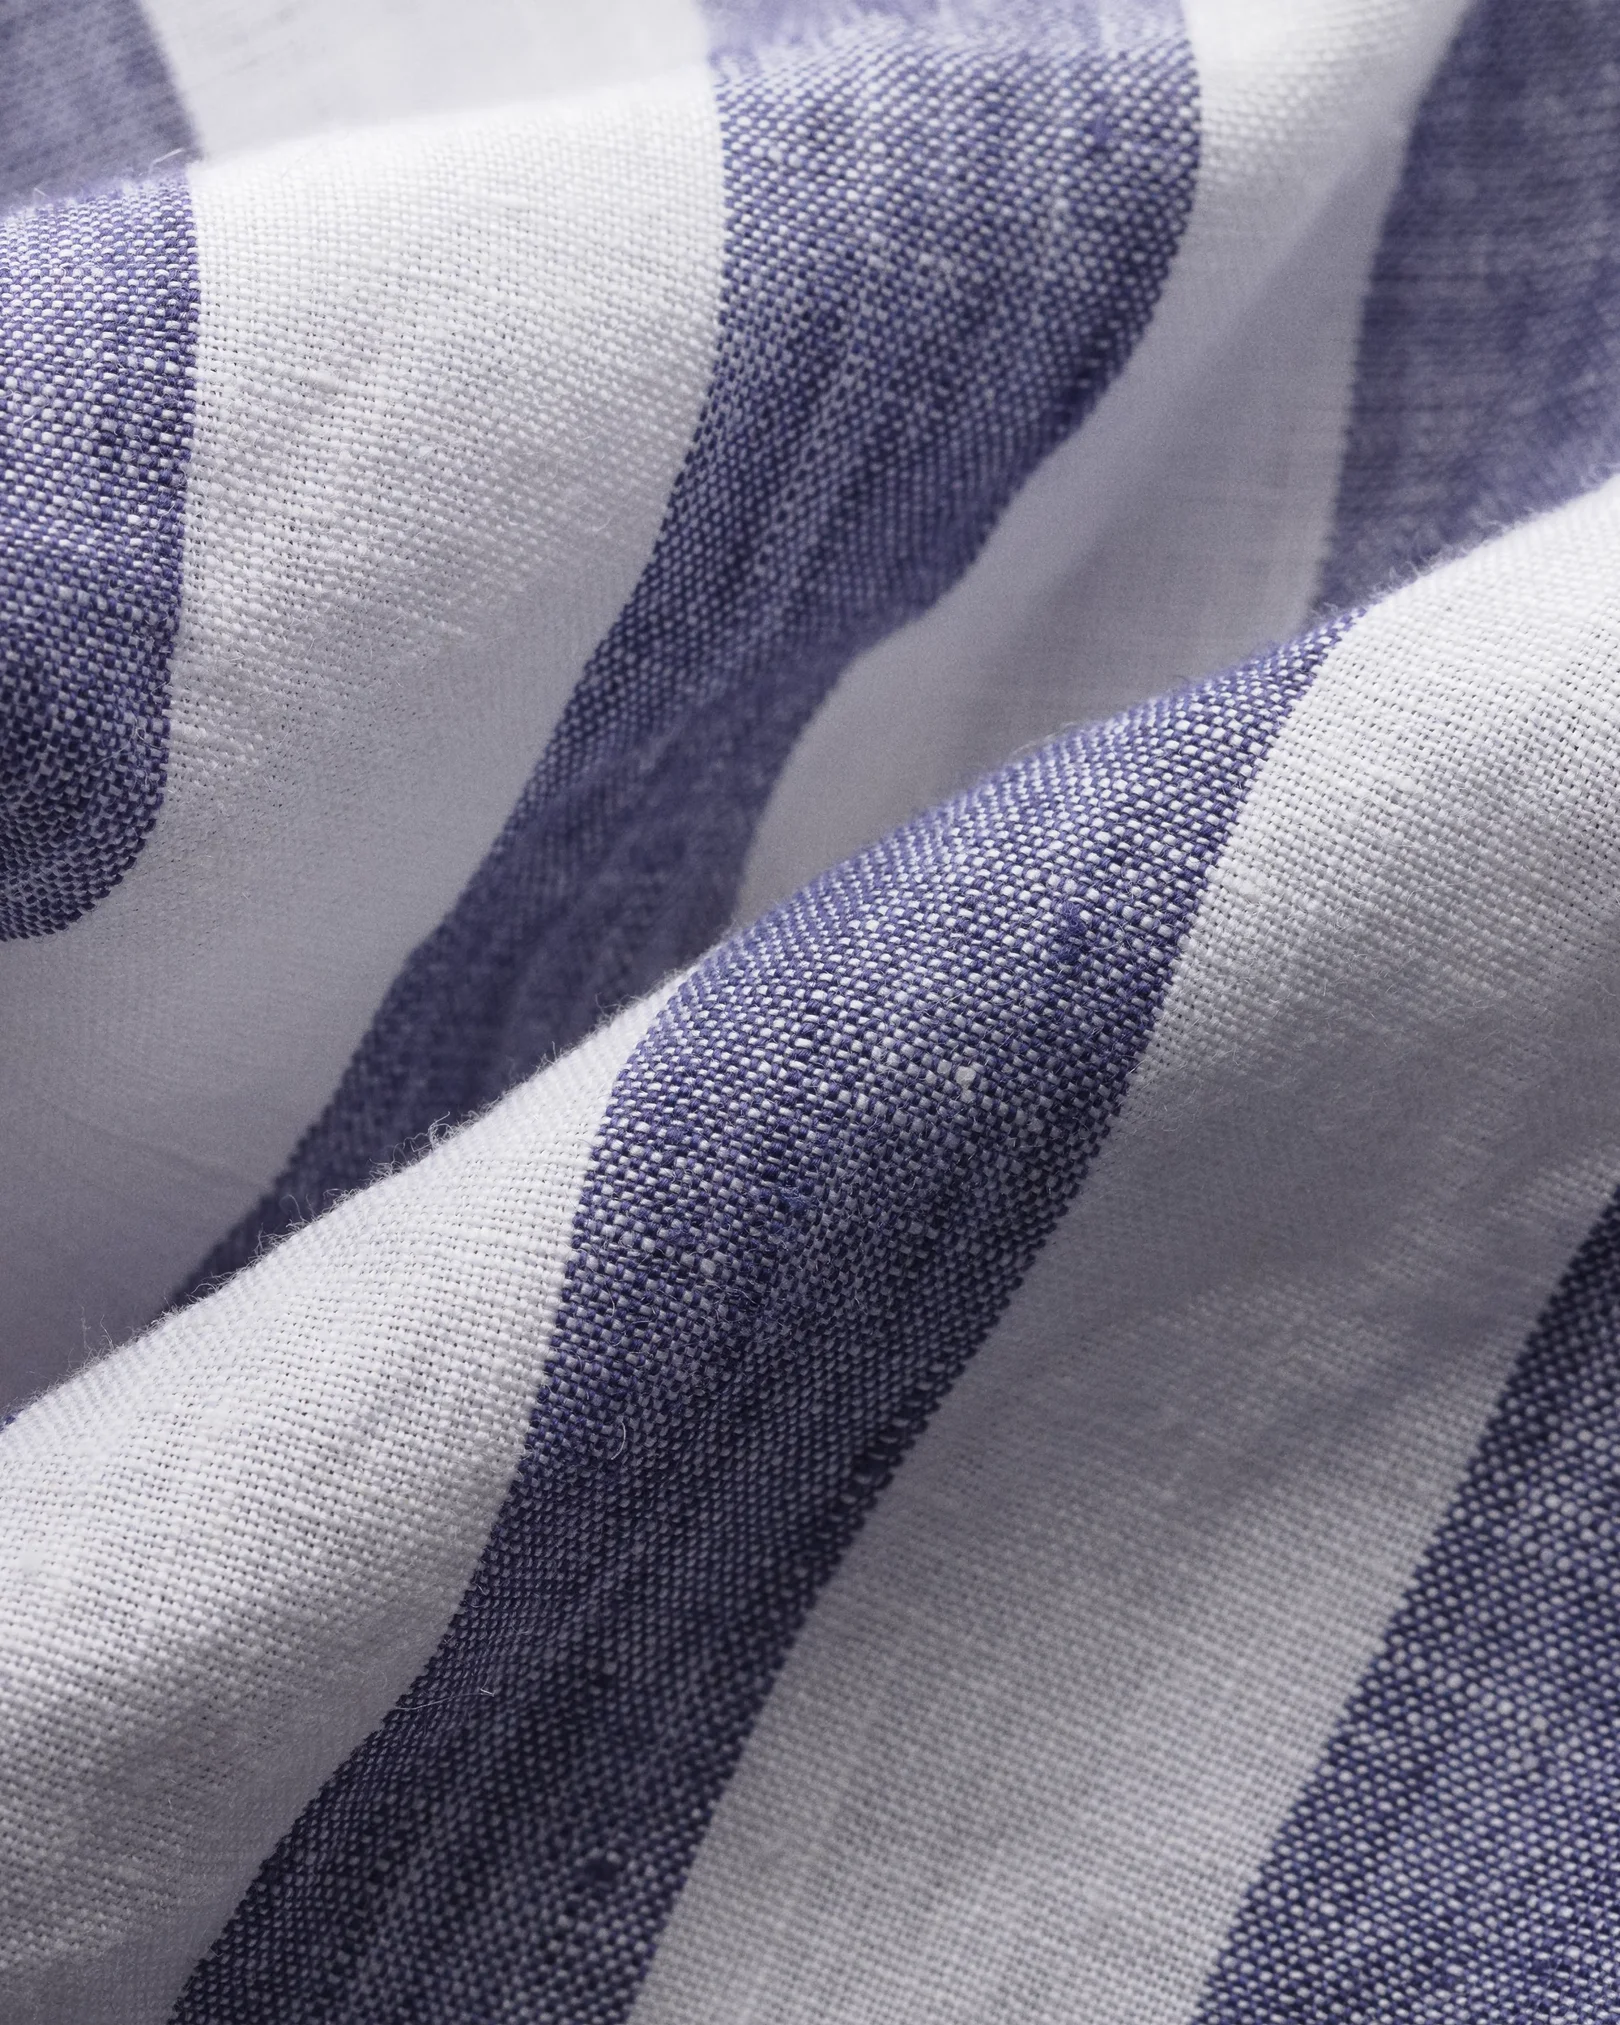 Eton - blue striped linen shirt